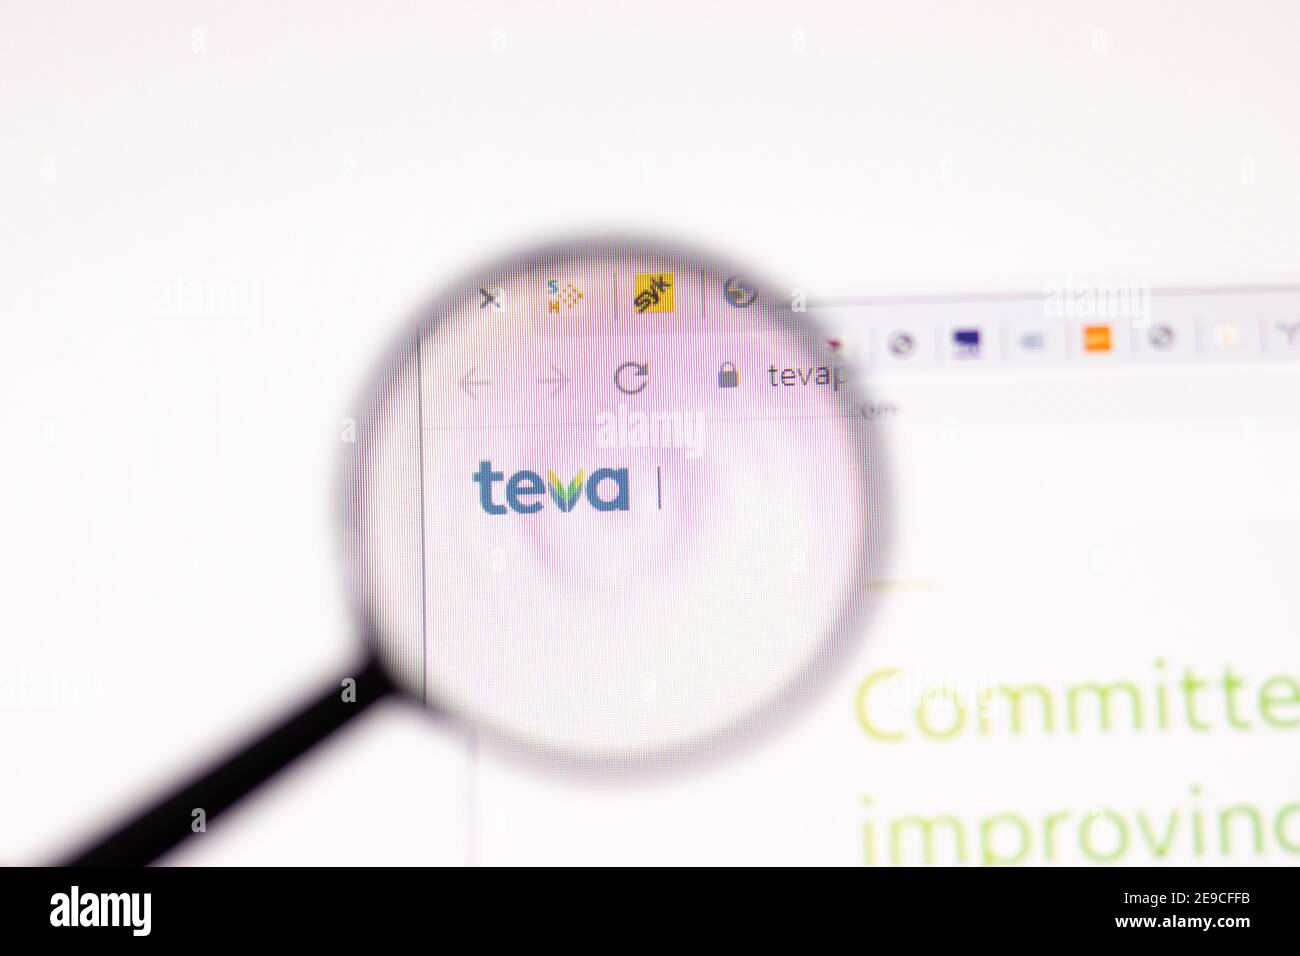 Los Angeles, USA - 1. Februar 2021: Teva Pharmaceutical Industries Webseite. Tevapharm.com Logo auf dem Display, illustrative Editorial Stockfoto